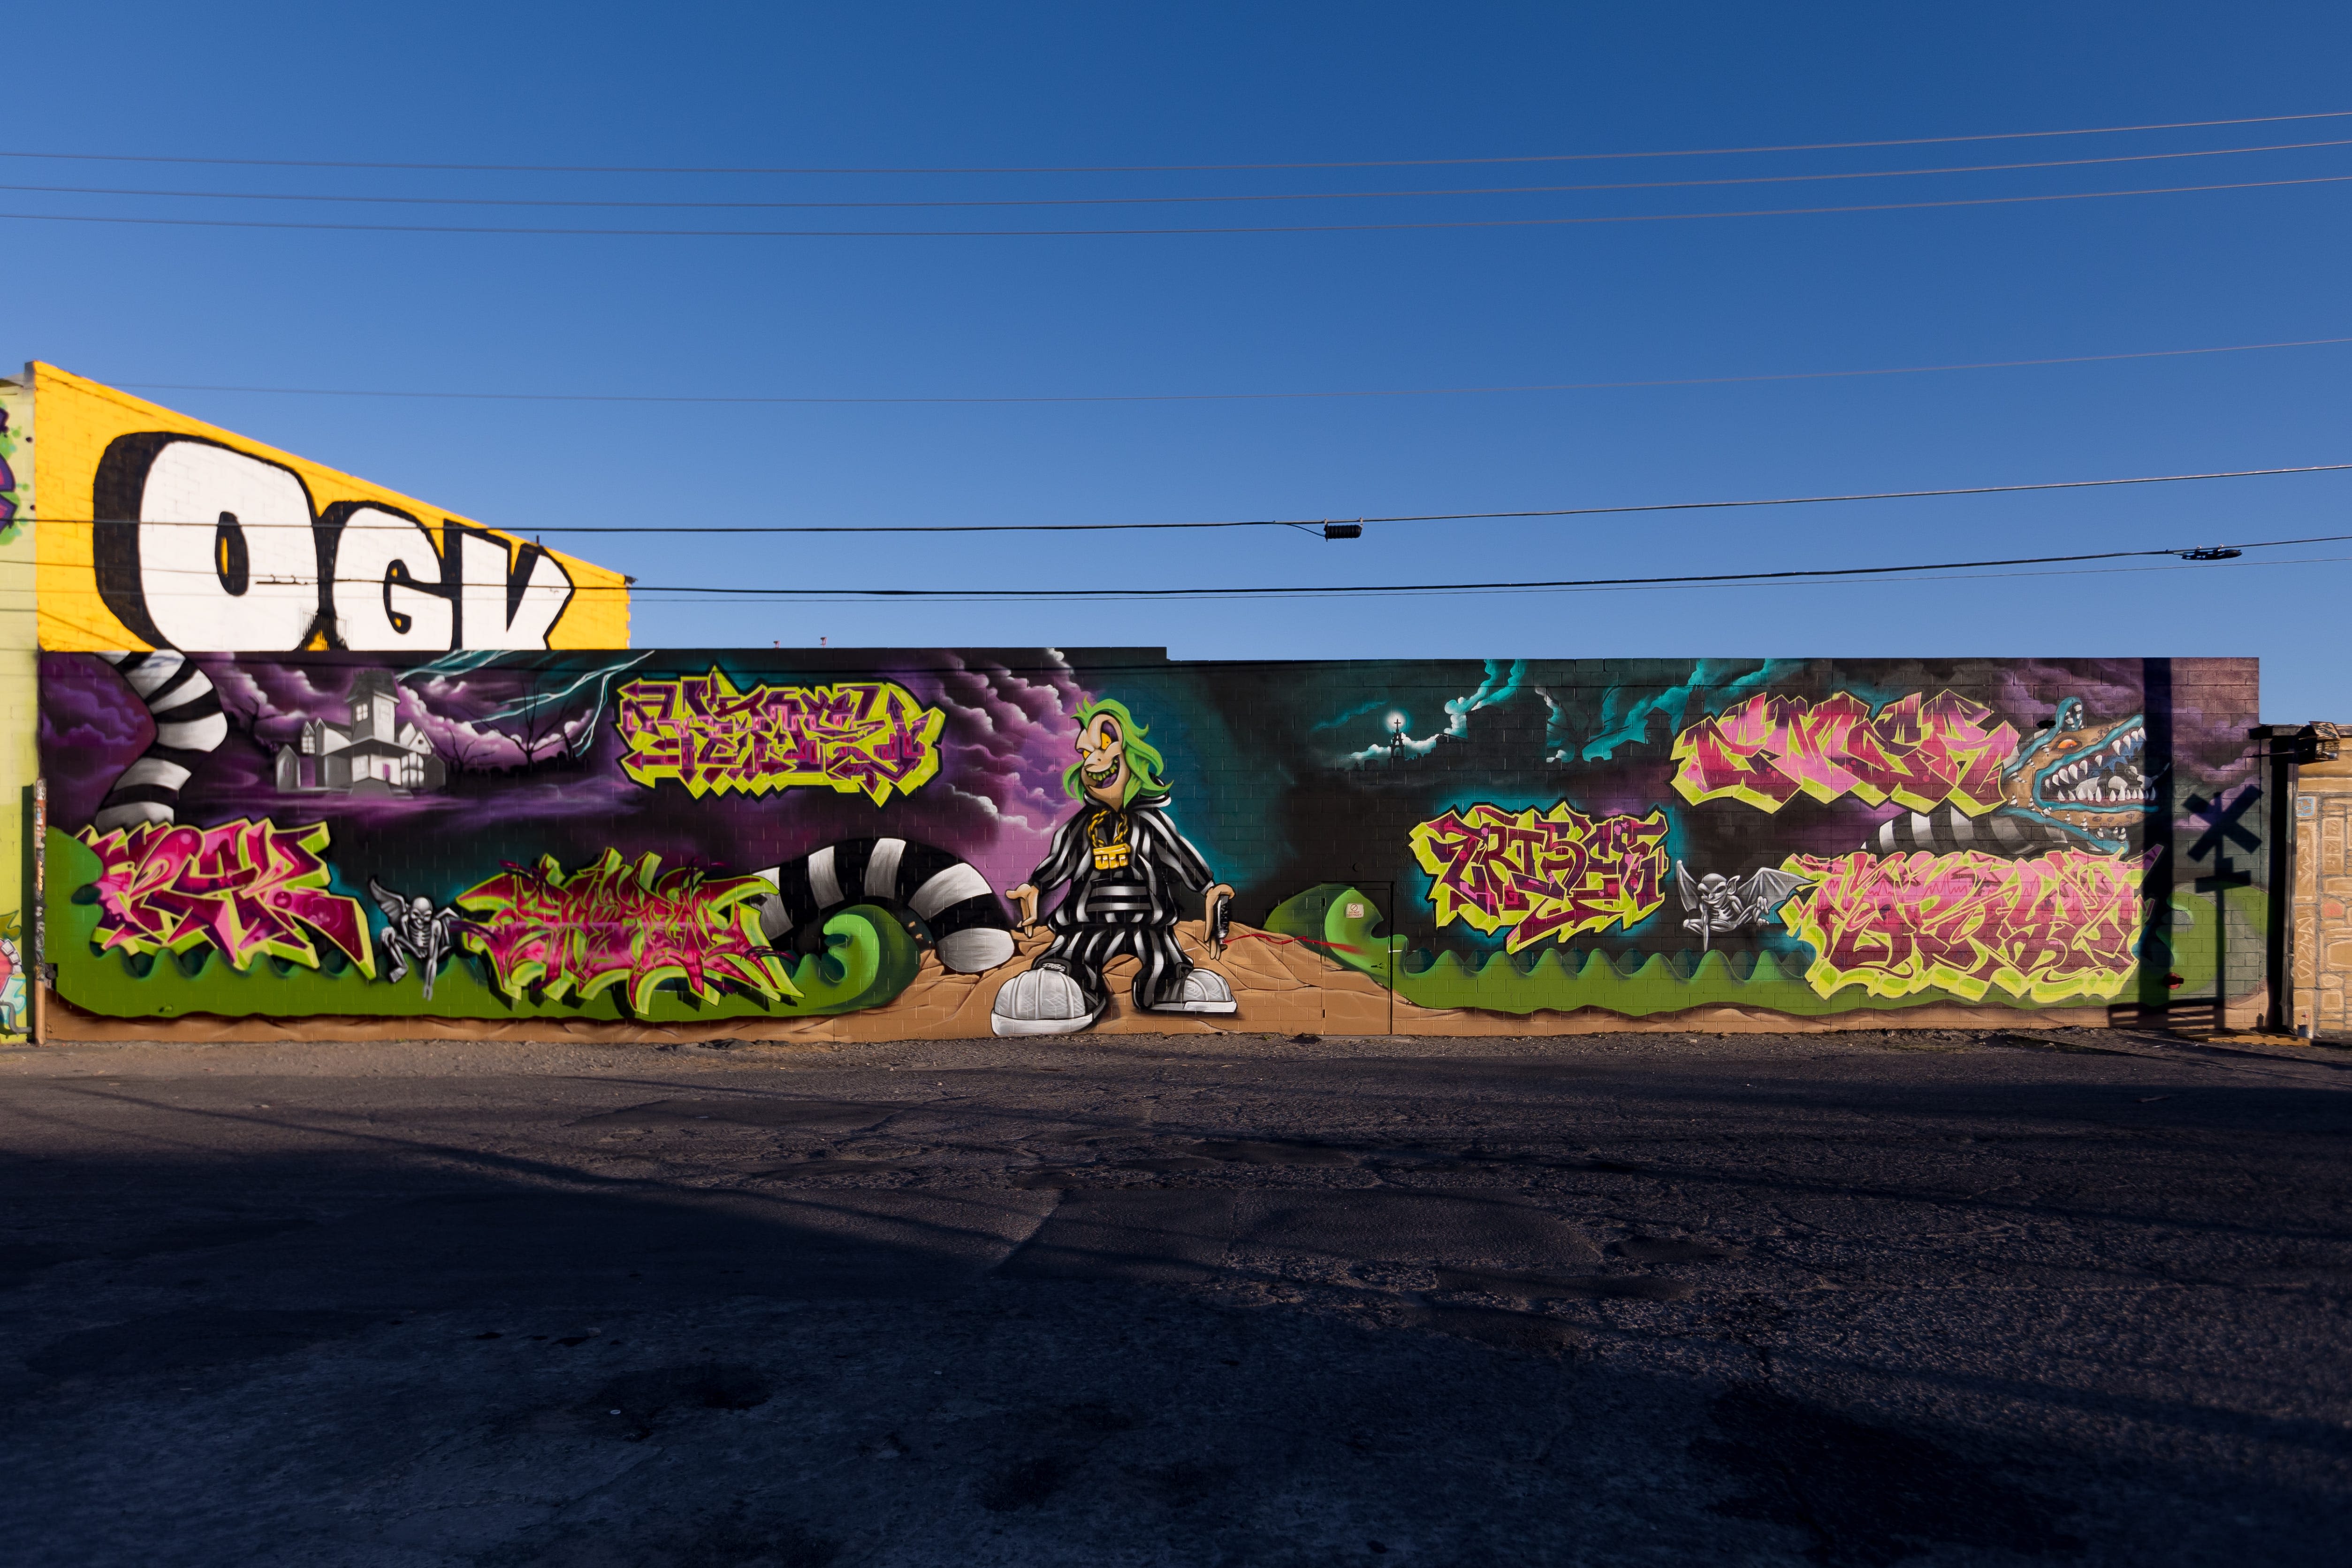 Masters of spray paint: New murals created during El Paso's Borderland Jam graffiti art show